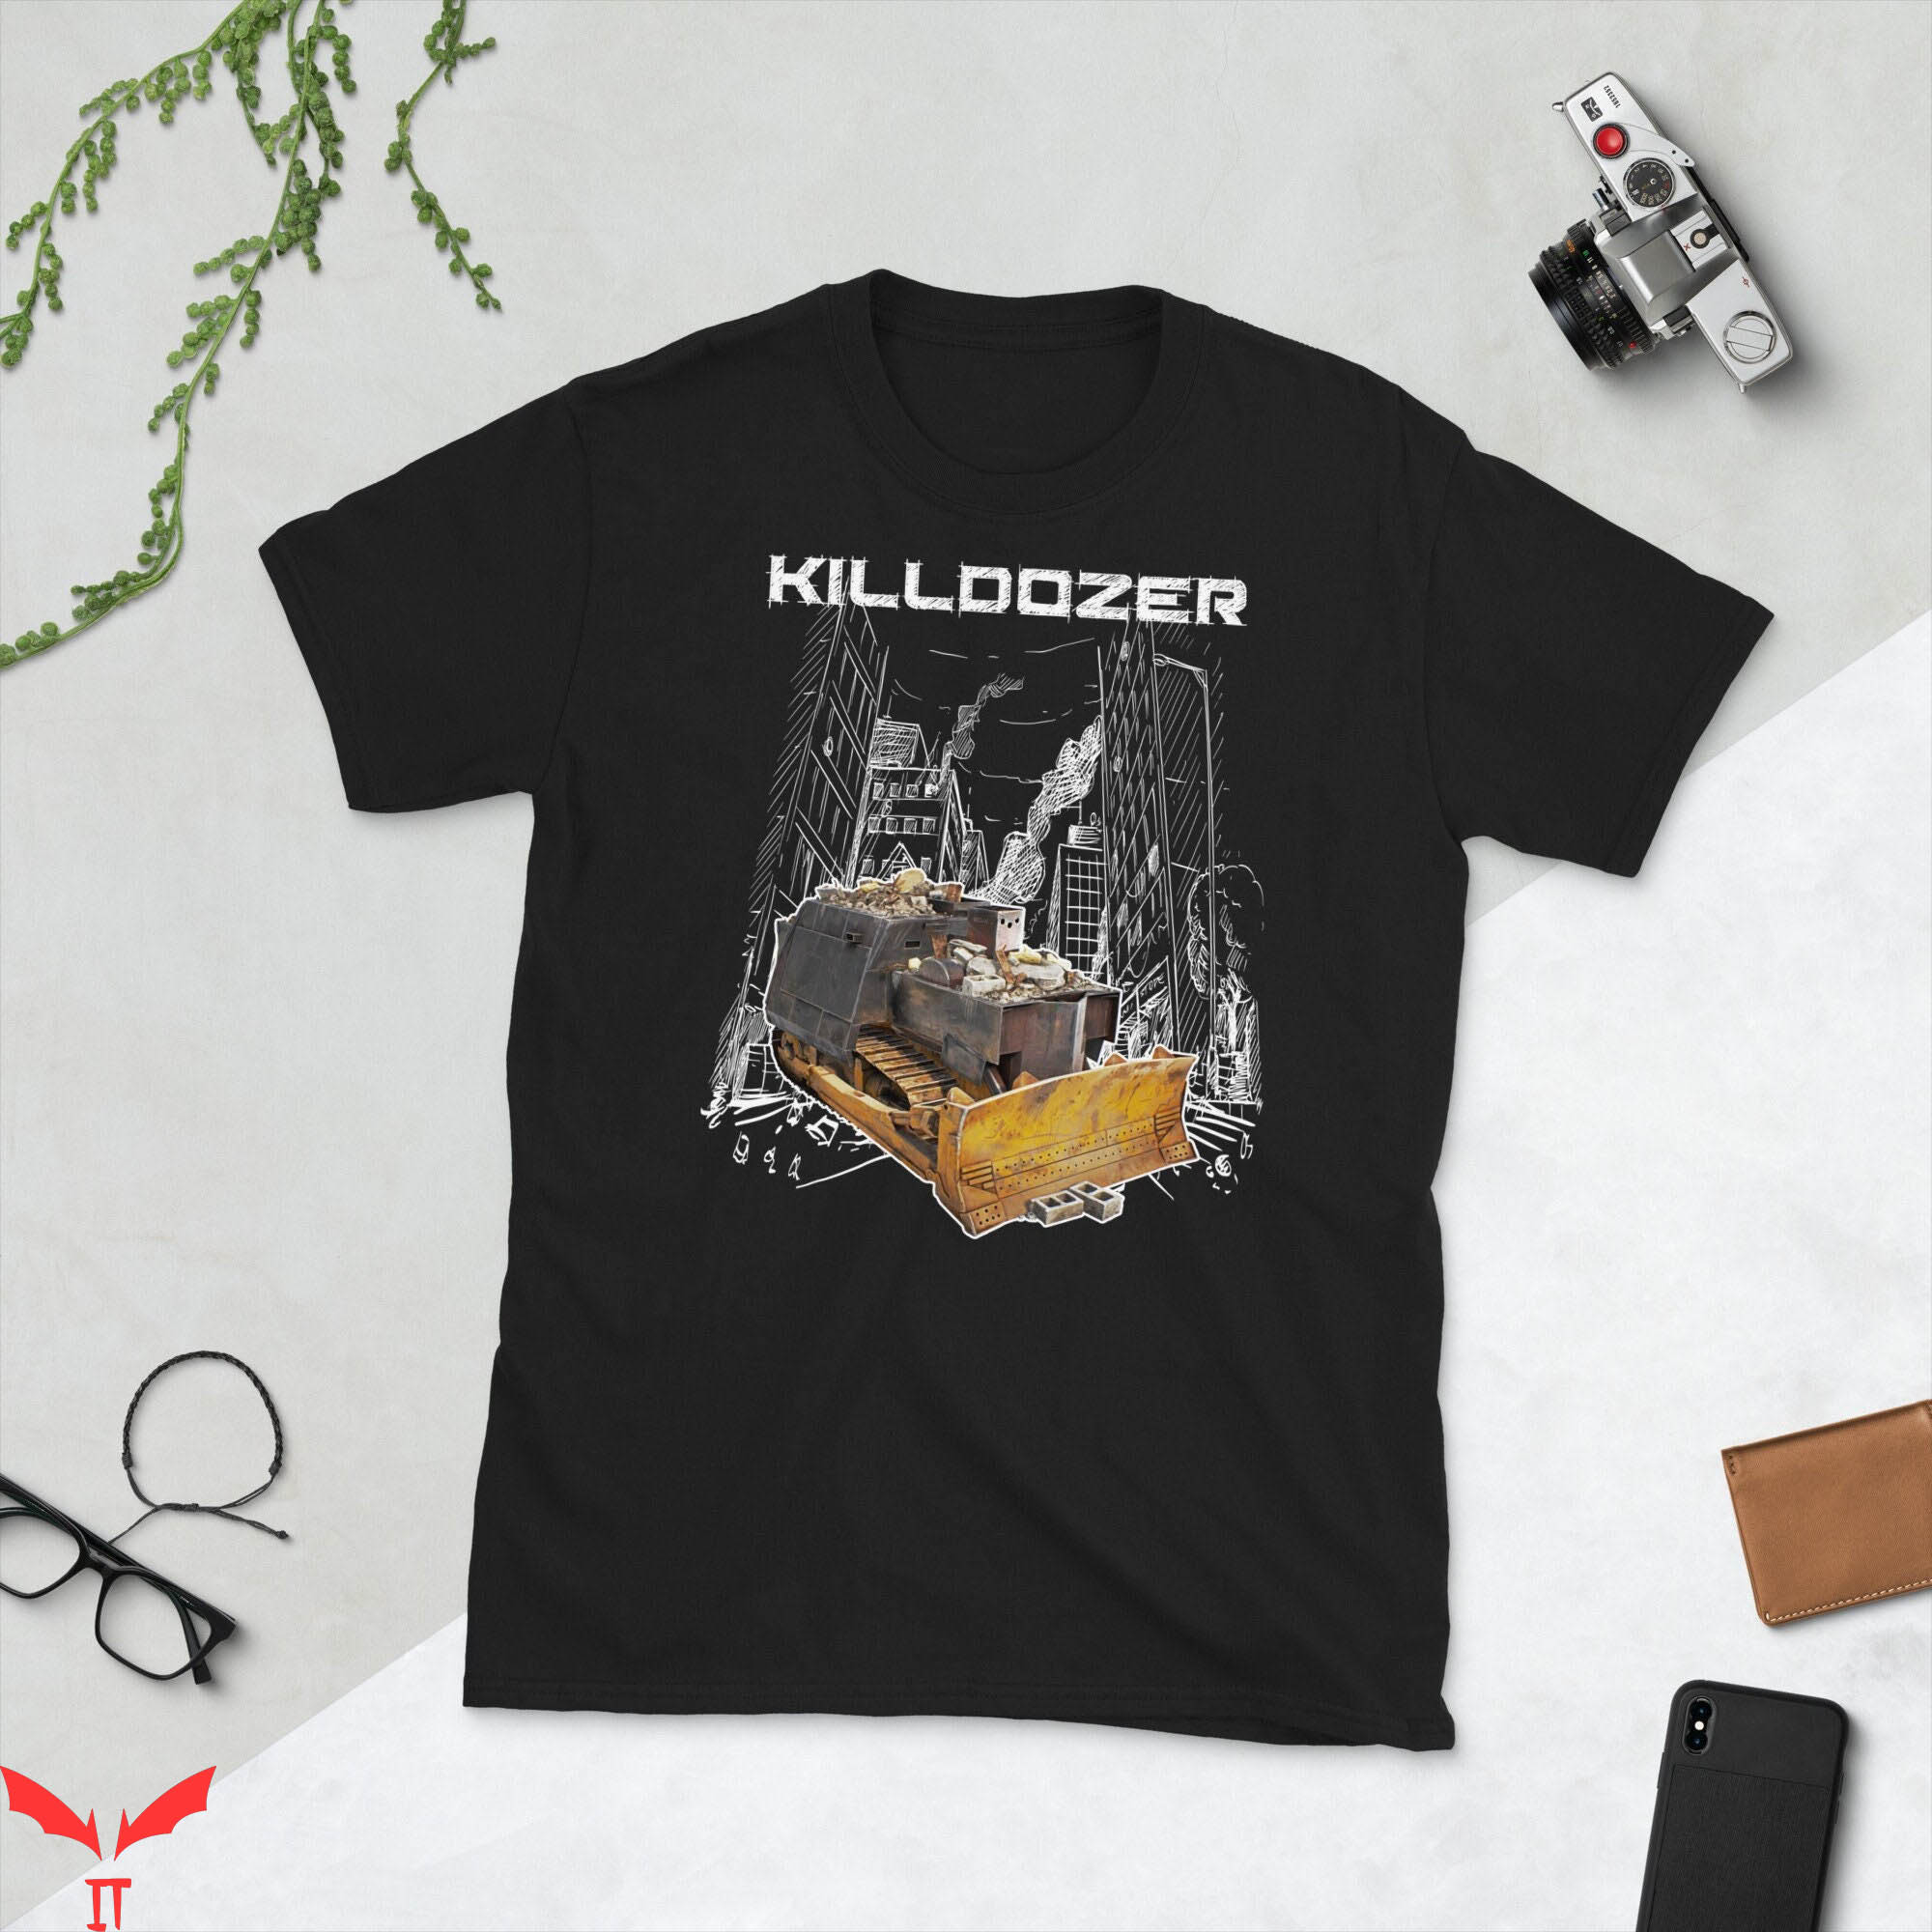 Killdozer T-Shirt Cool Design Funny Graphic Tee Shirt